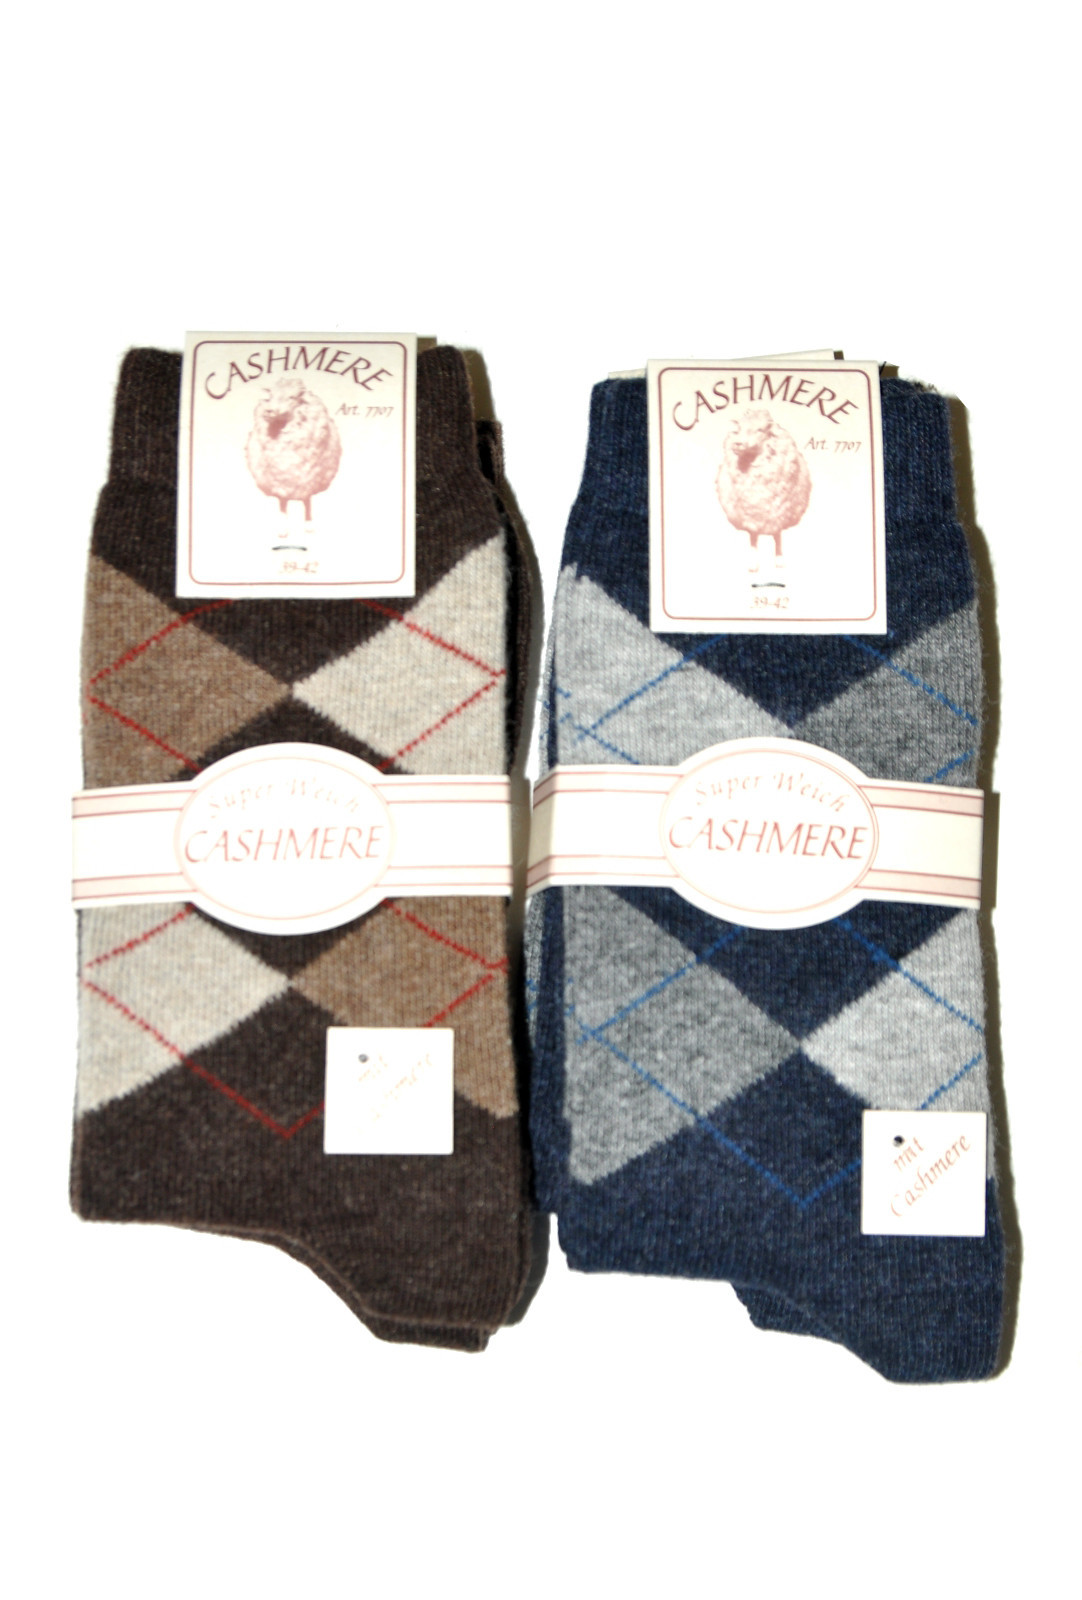 Pánské ponožky Ulpio Cashmere 7707/7708 A'2 směs barev 43-46